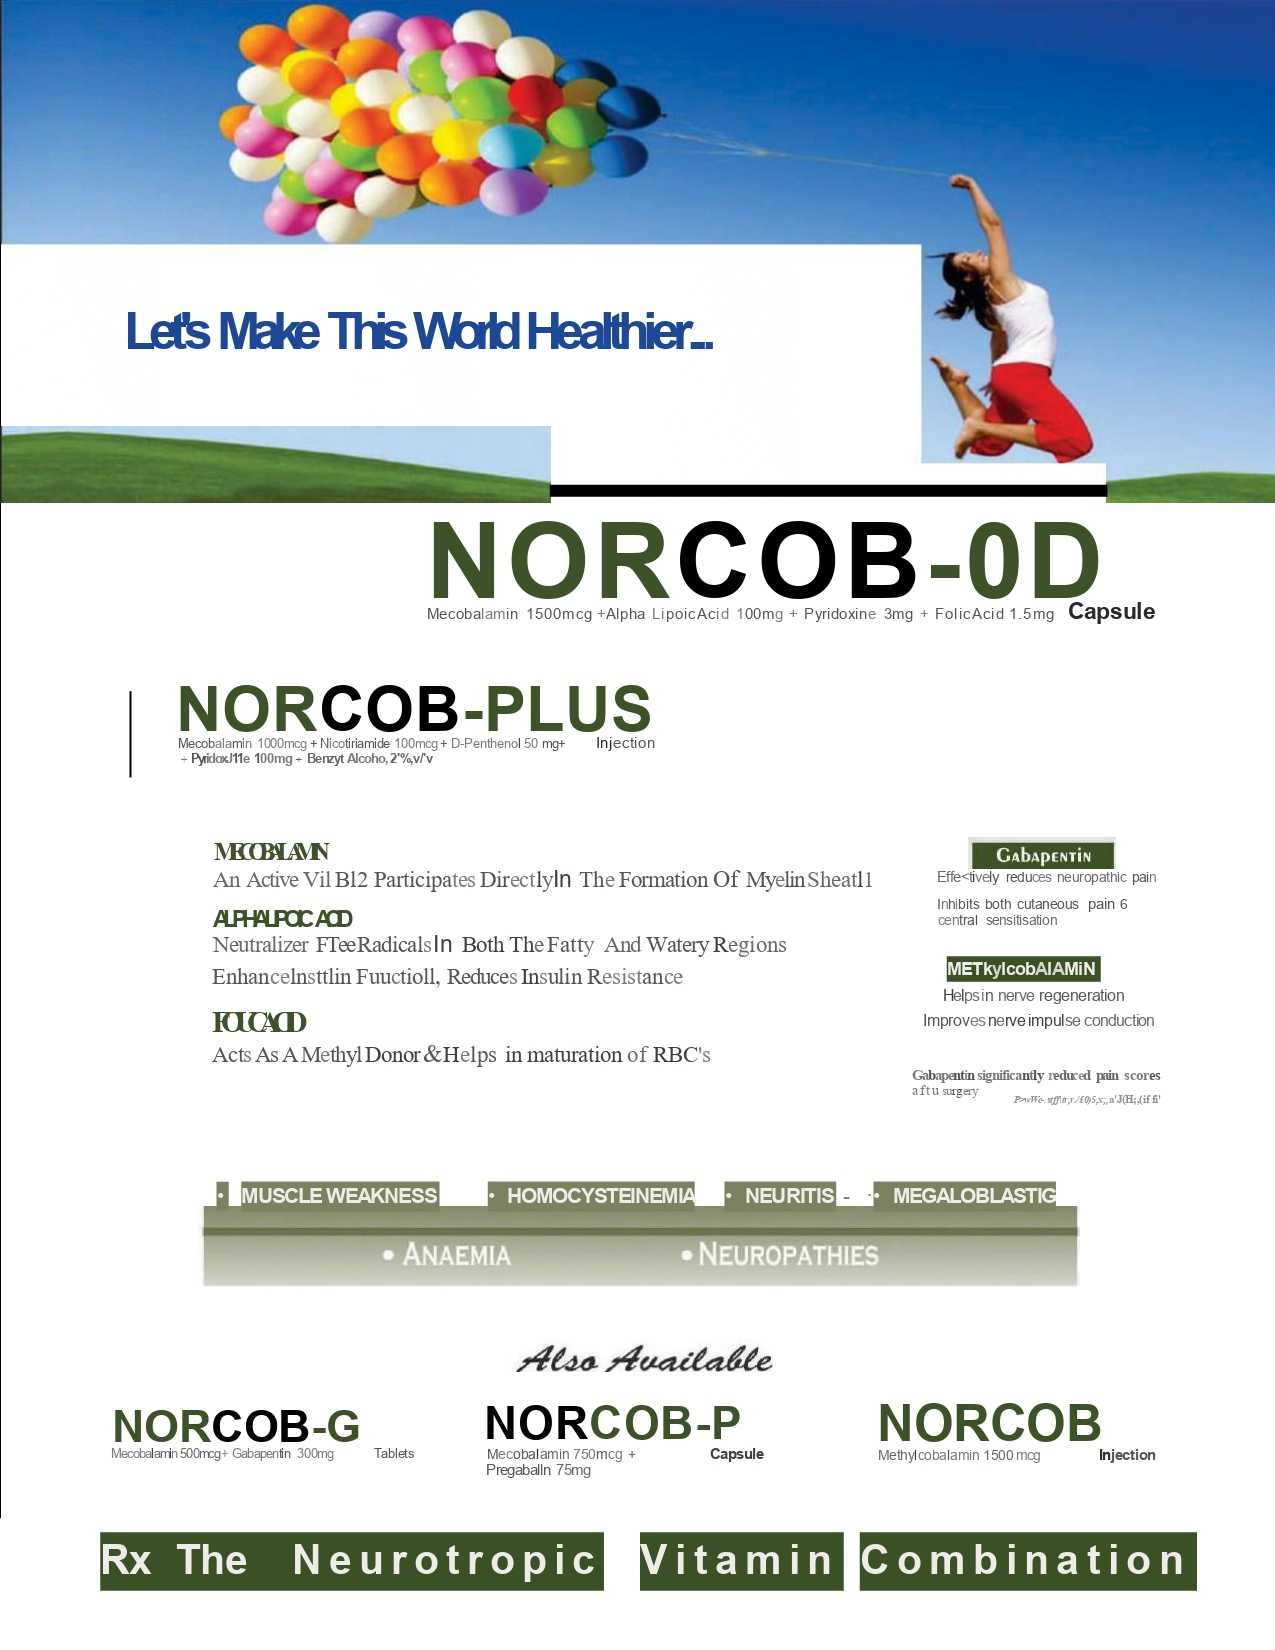 Norcob-G